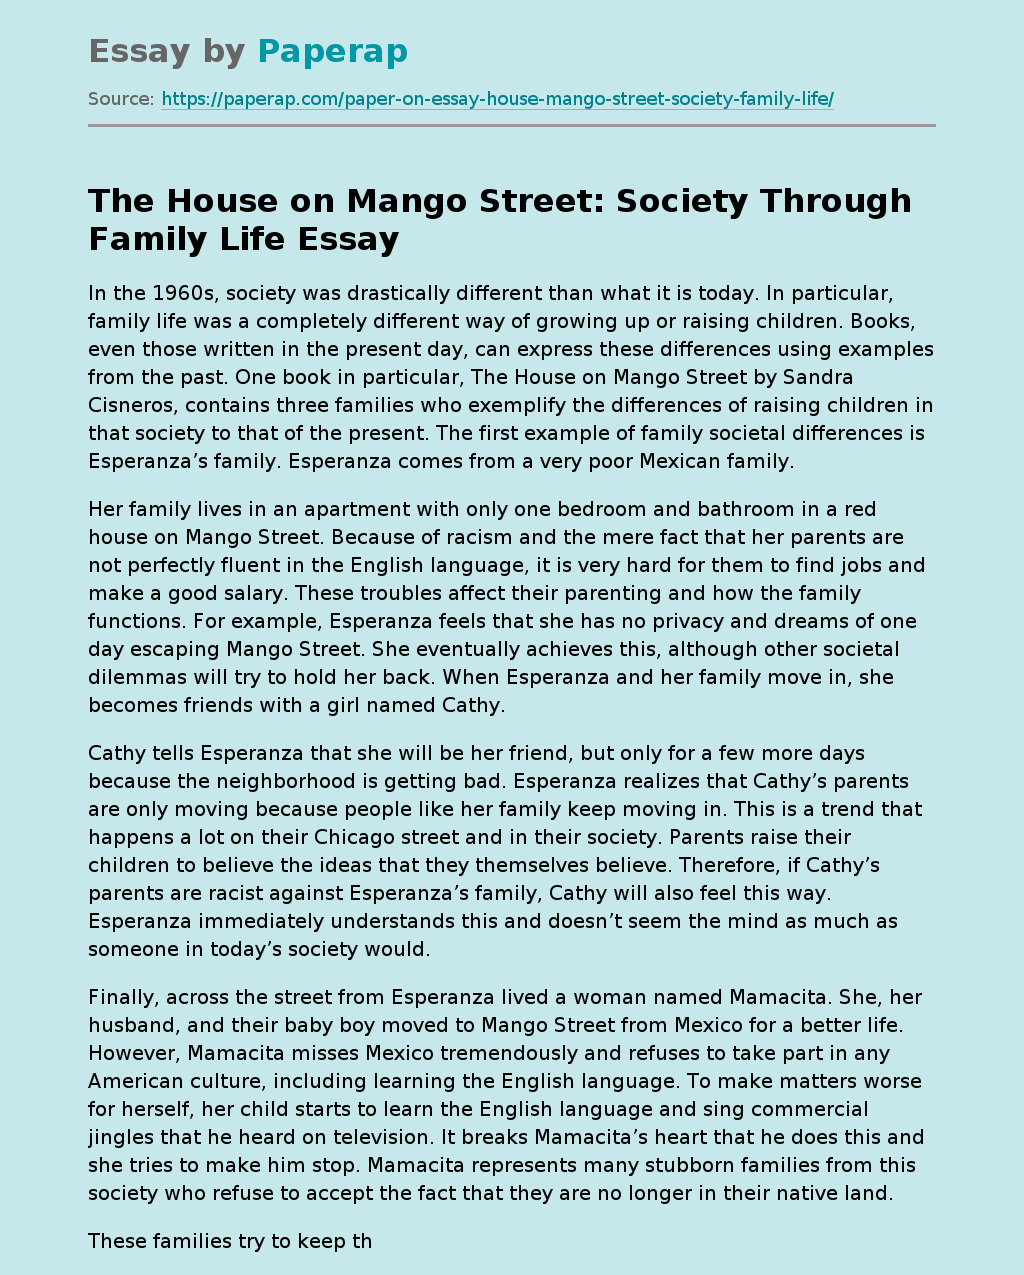 The House on Mango Street: Society Through Family Life